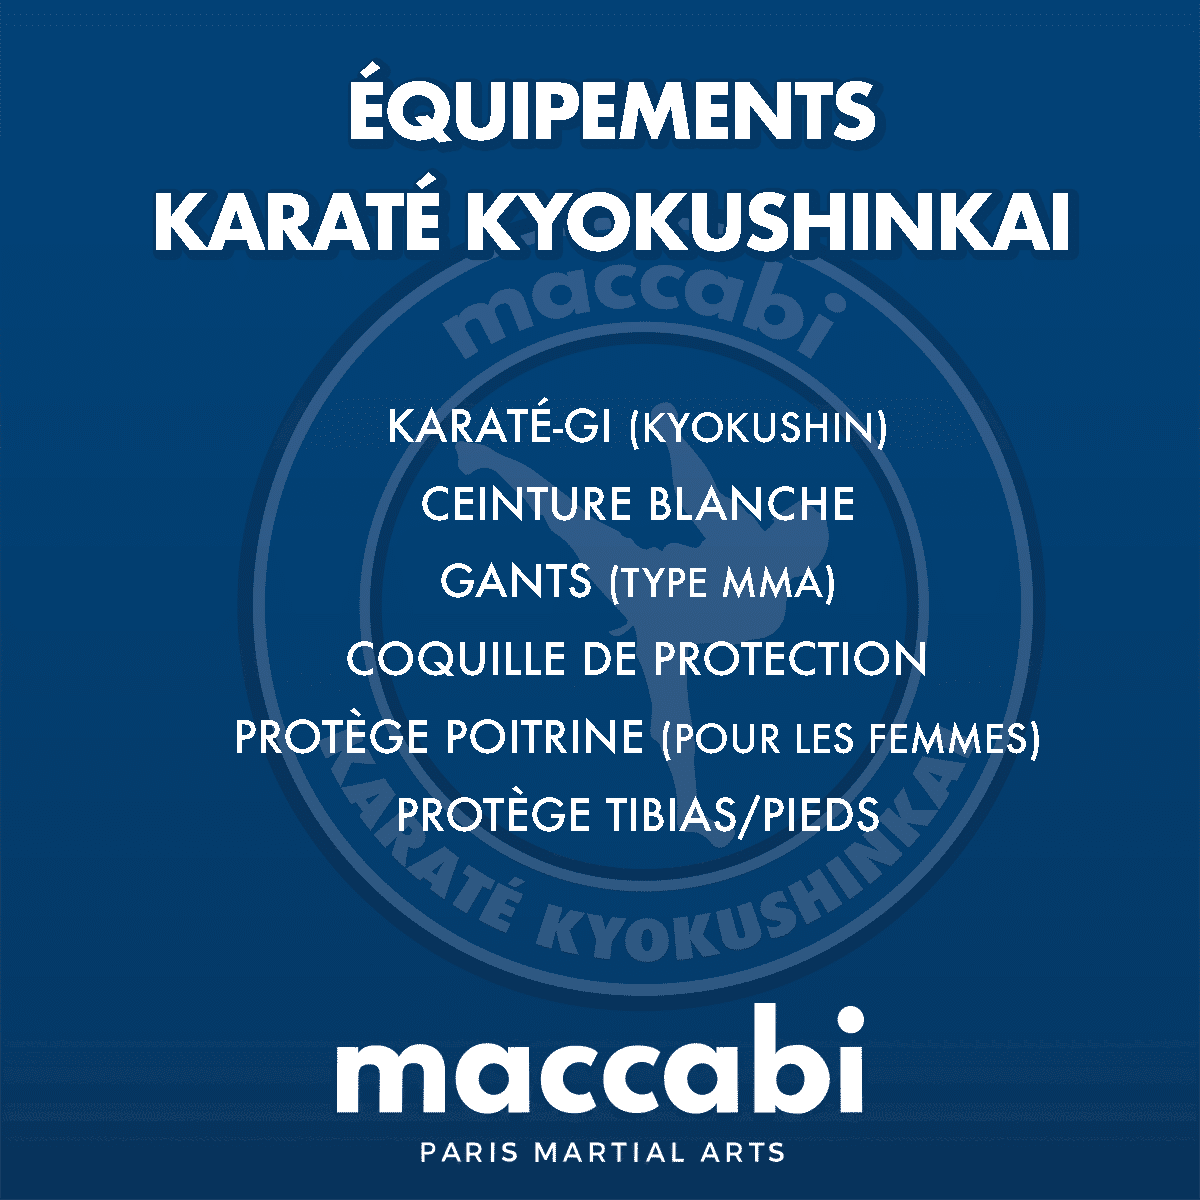 Equipement pour Karate Kyokushinkai chez Maccabi Paris